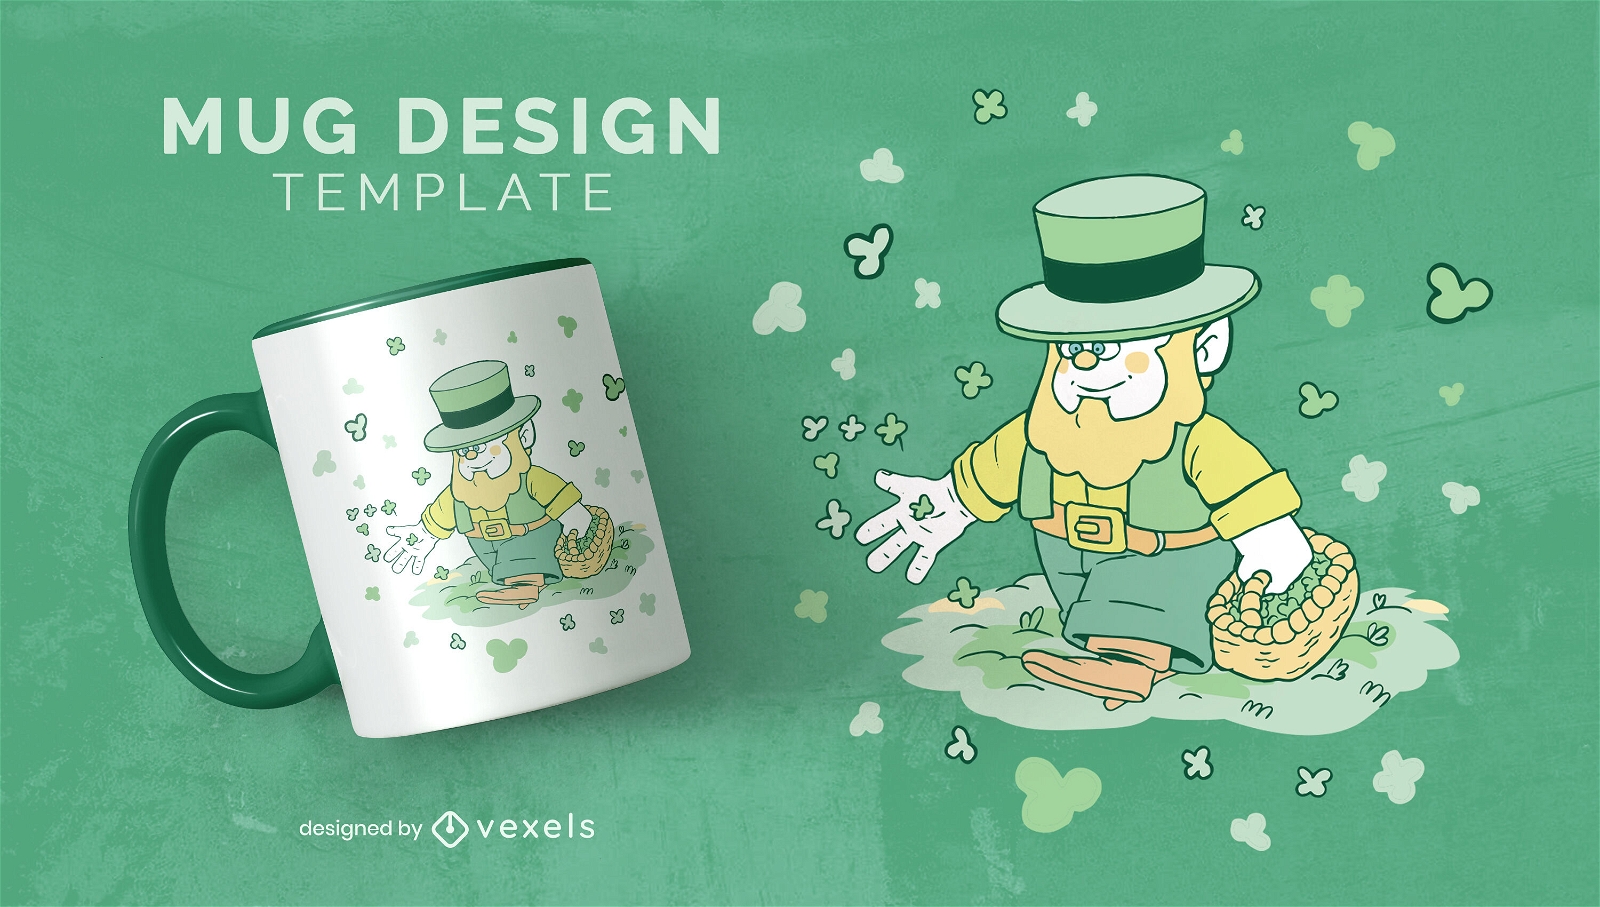 St Patricks character mug template design